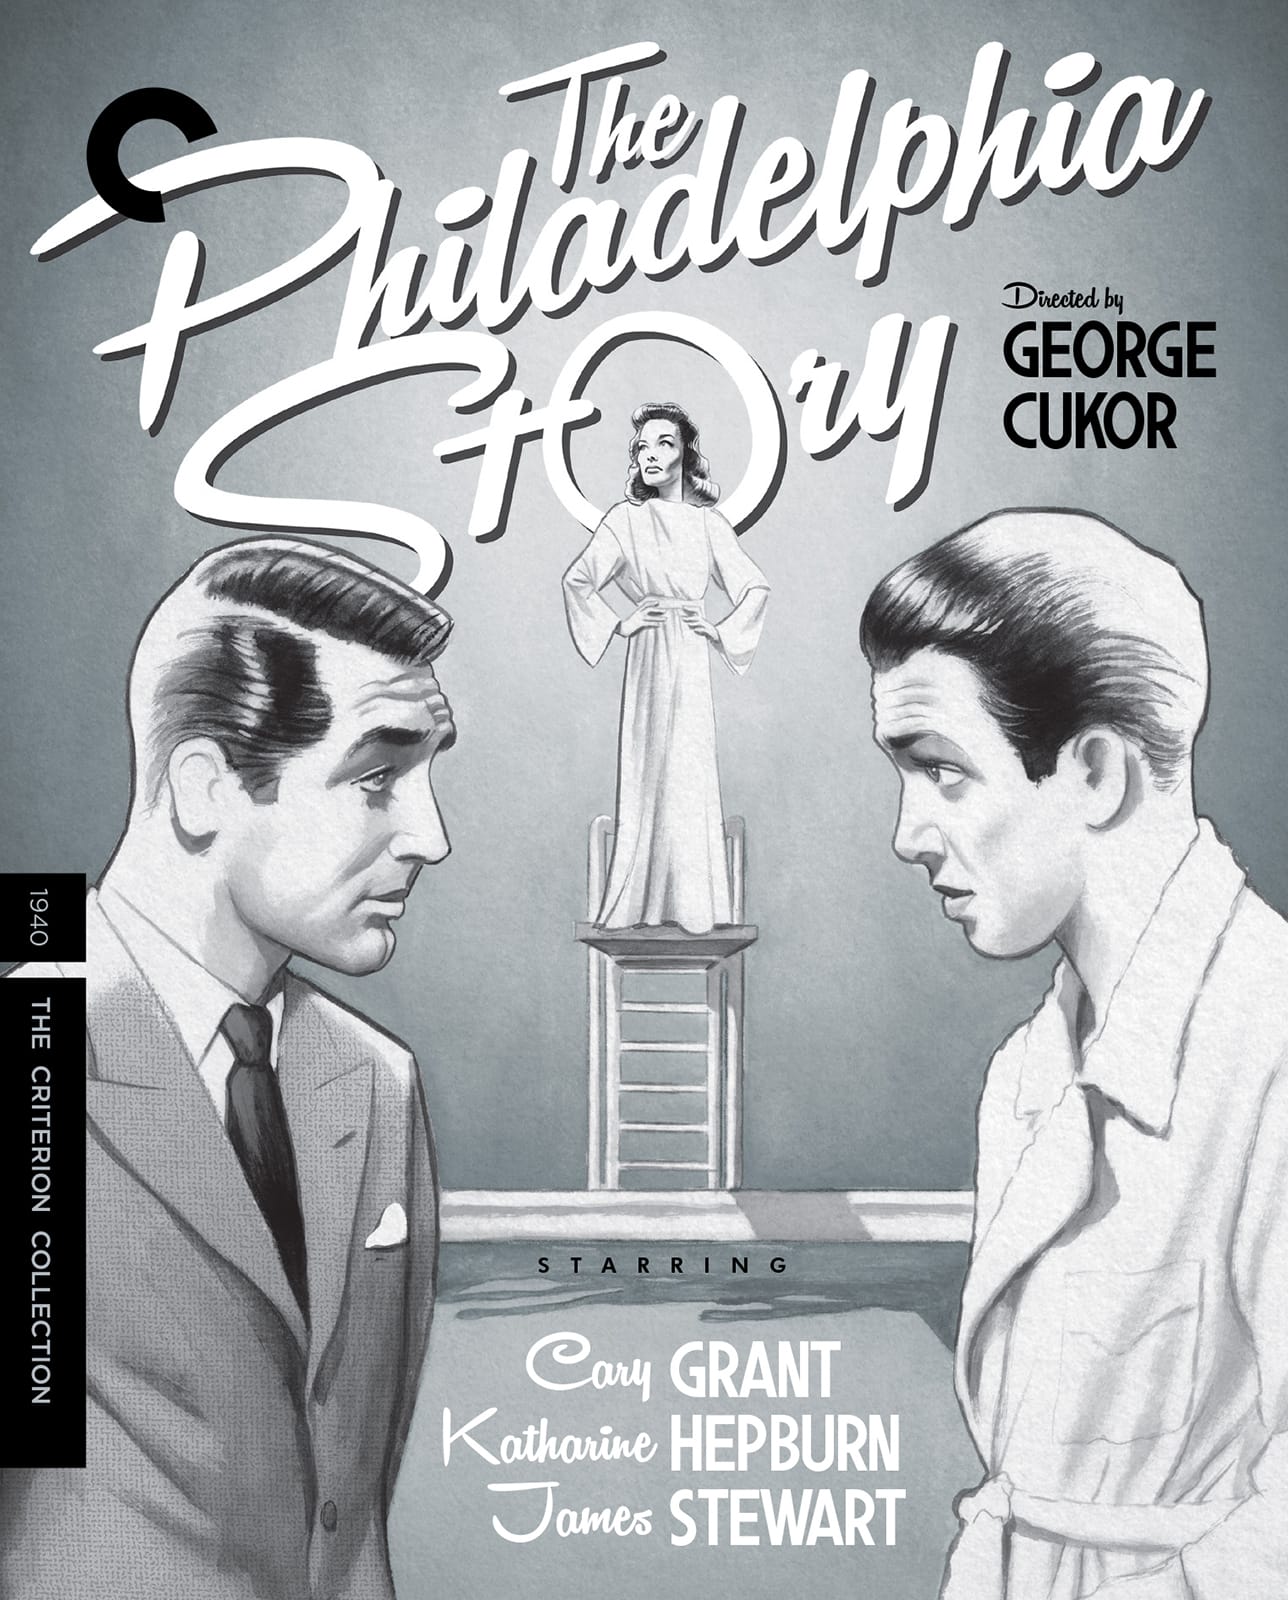 The Philadelphia Story Review